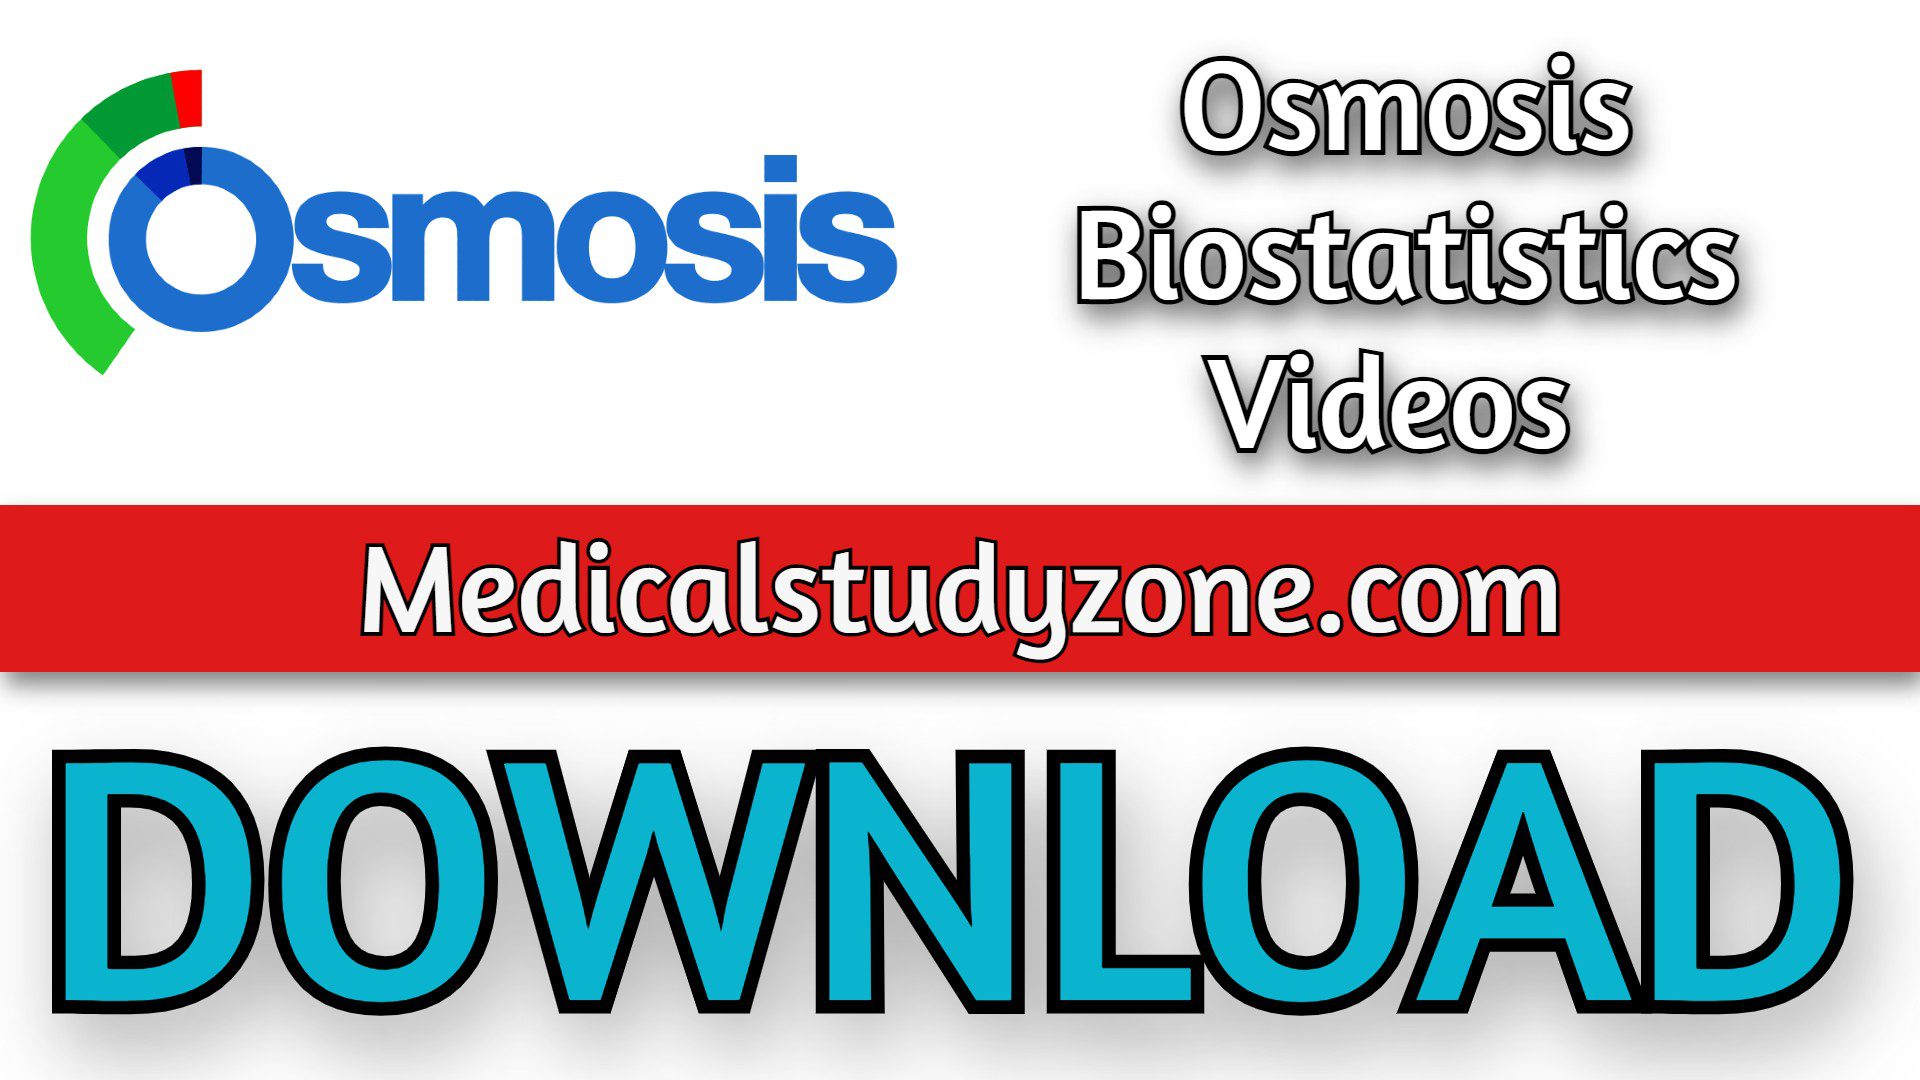 Osmosis Biostatistics Videos 2021 Free Download